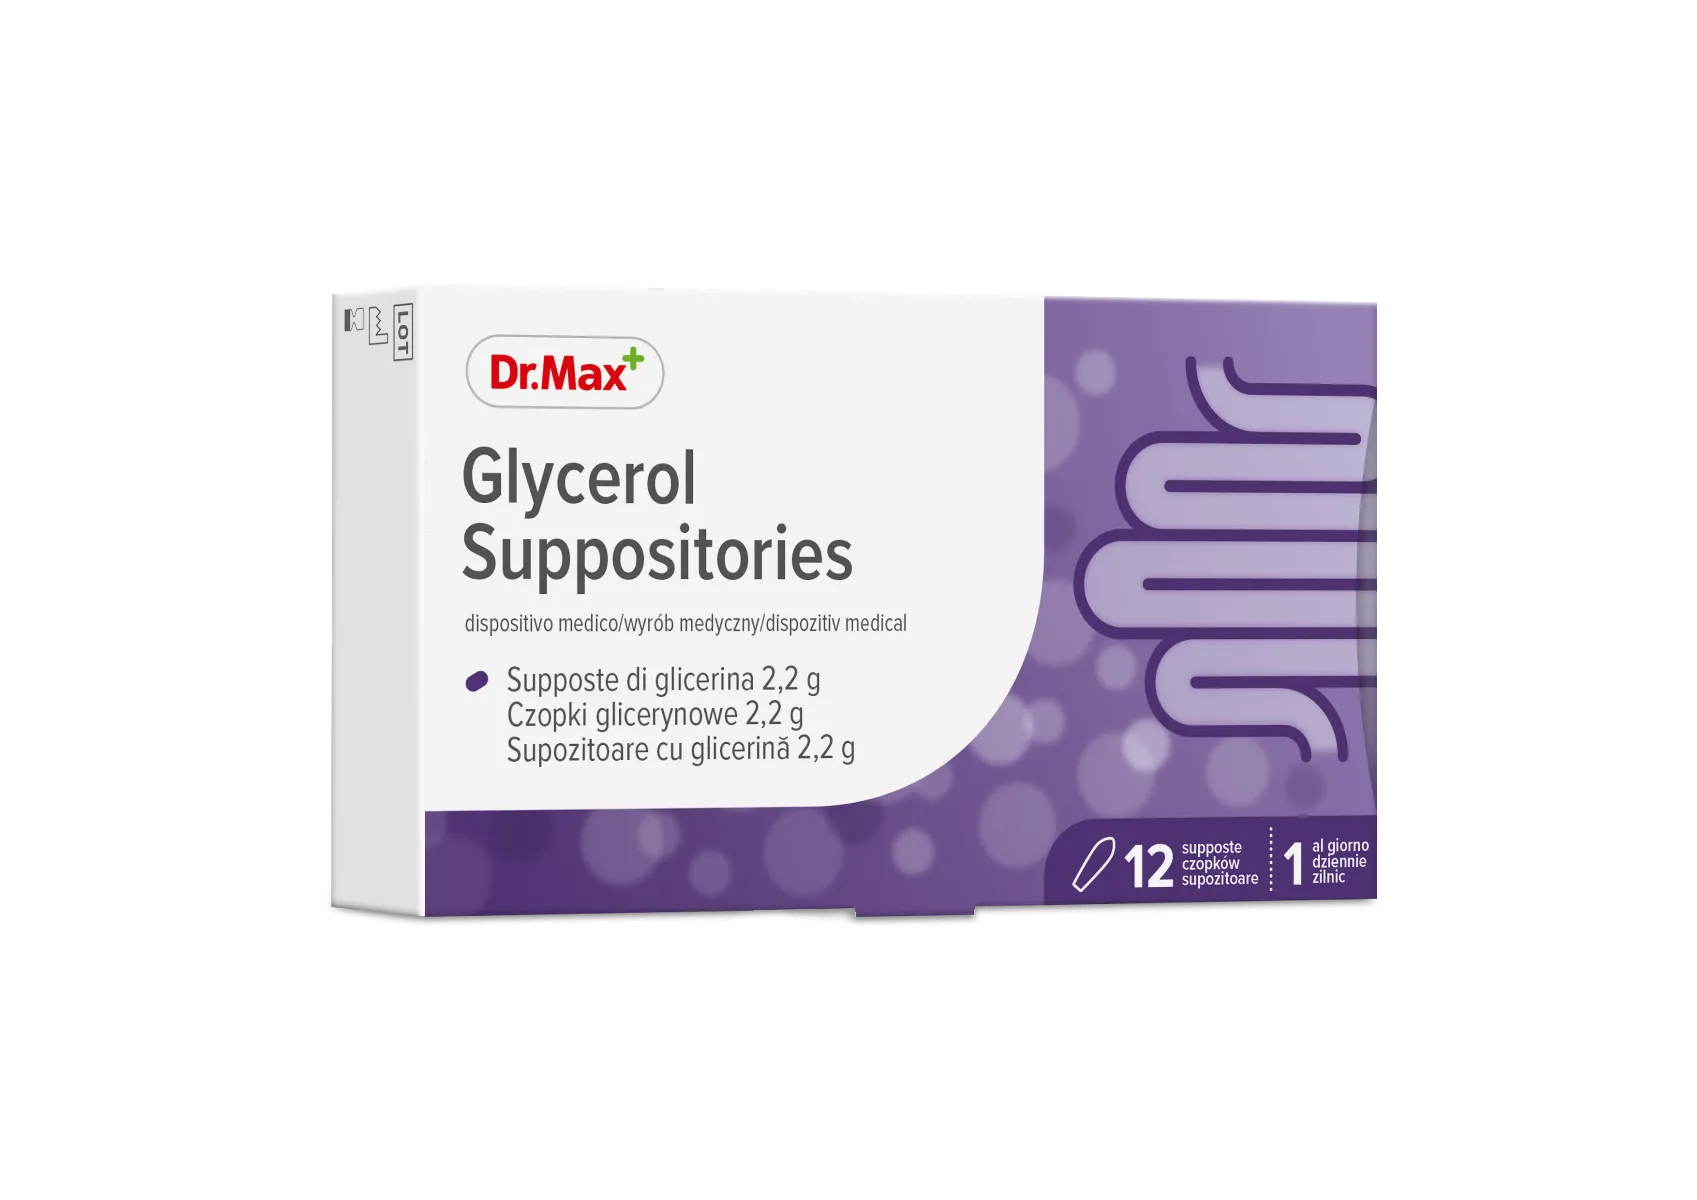 Glycerol Suppositories Dr.Max, czopki glicerynowe 2,2g, 12 sztuk